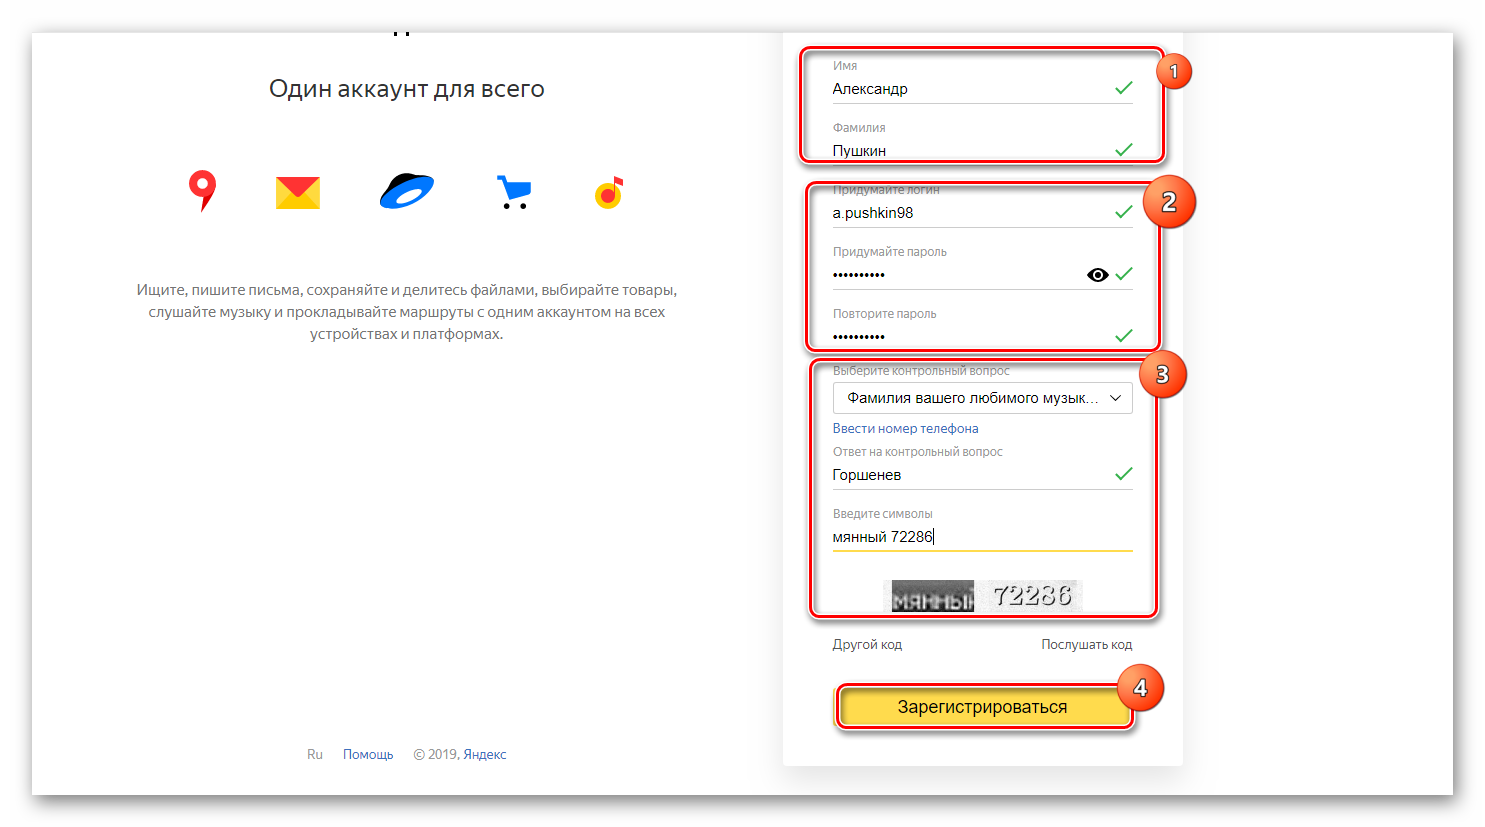 Создать аккаунт яндекса новый. Как создать аккаунт в Яндексе.